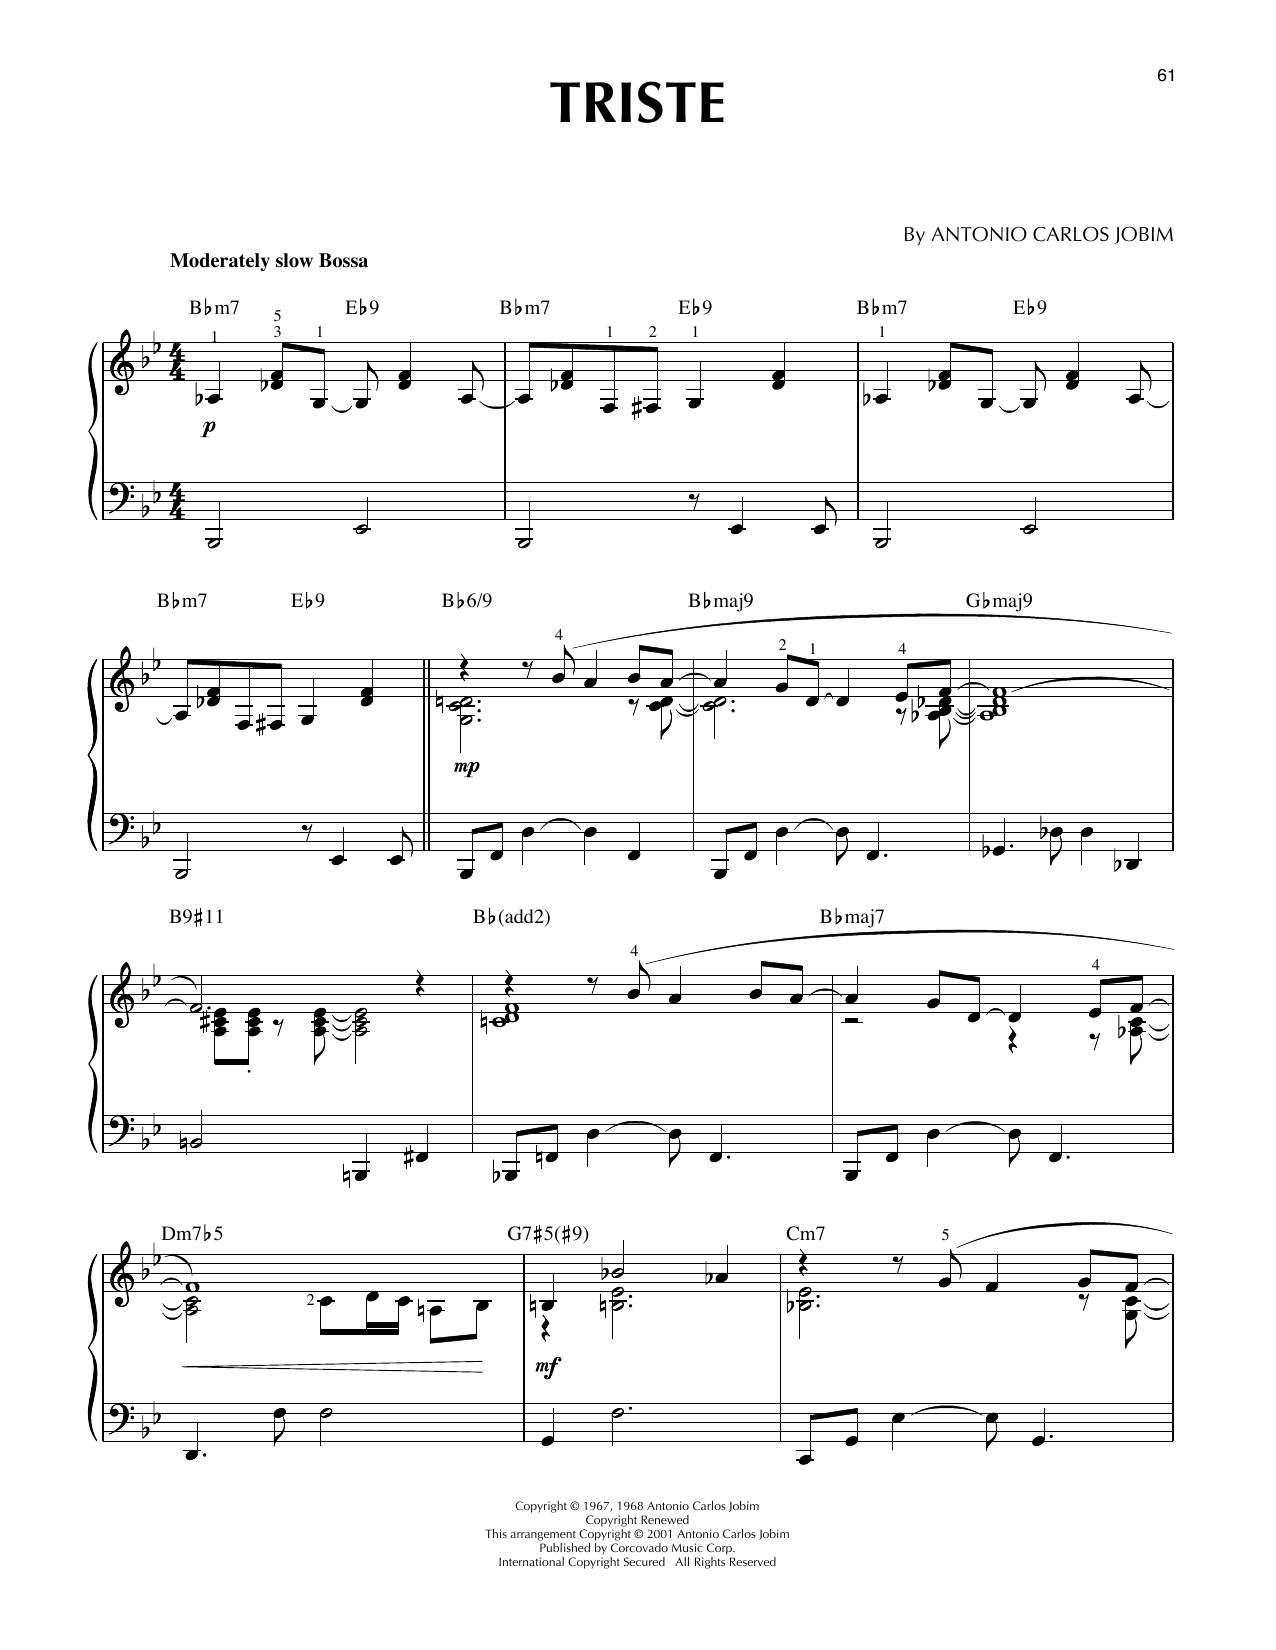 Antonio Carlos Jobim Triste [Jazz version] (arr. Brent Edstrom) Sheet Music Notes & Chords for Piano Solo - Download or Print PDF